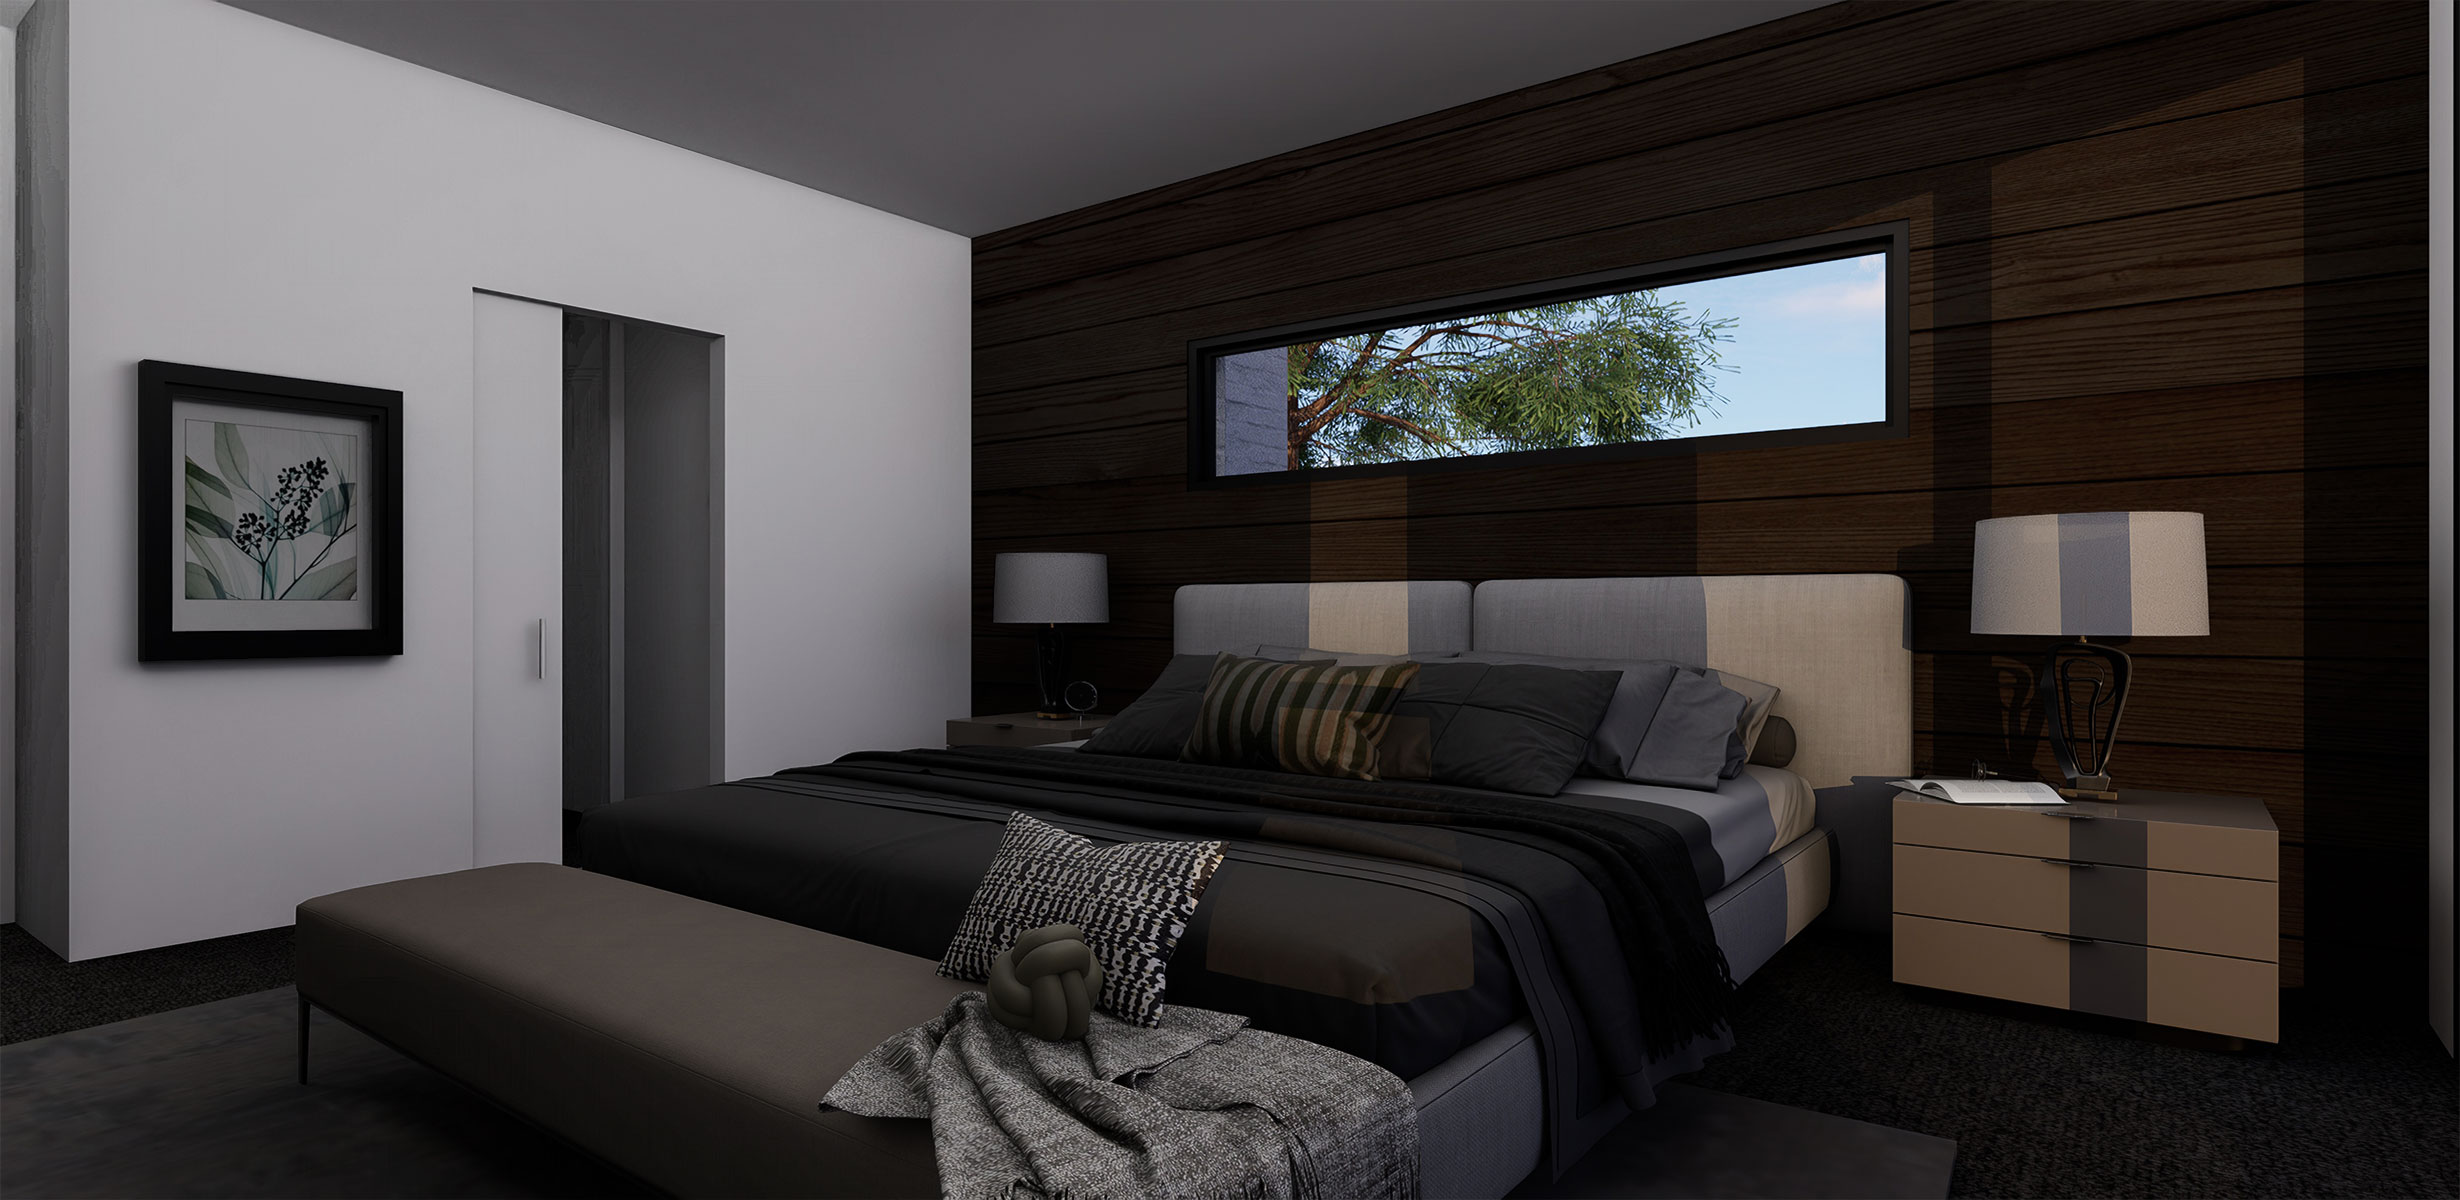 Hallmark Homes Prestige Series Cardrona Deluxe House Plan Master Bedroom View Christchurch Canterbury NZ.